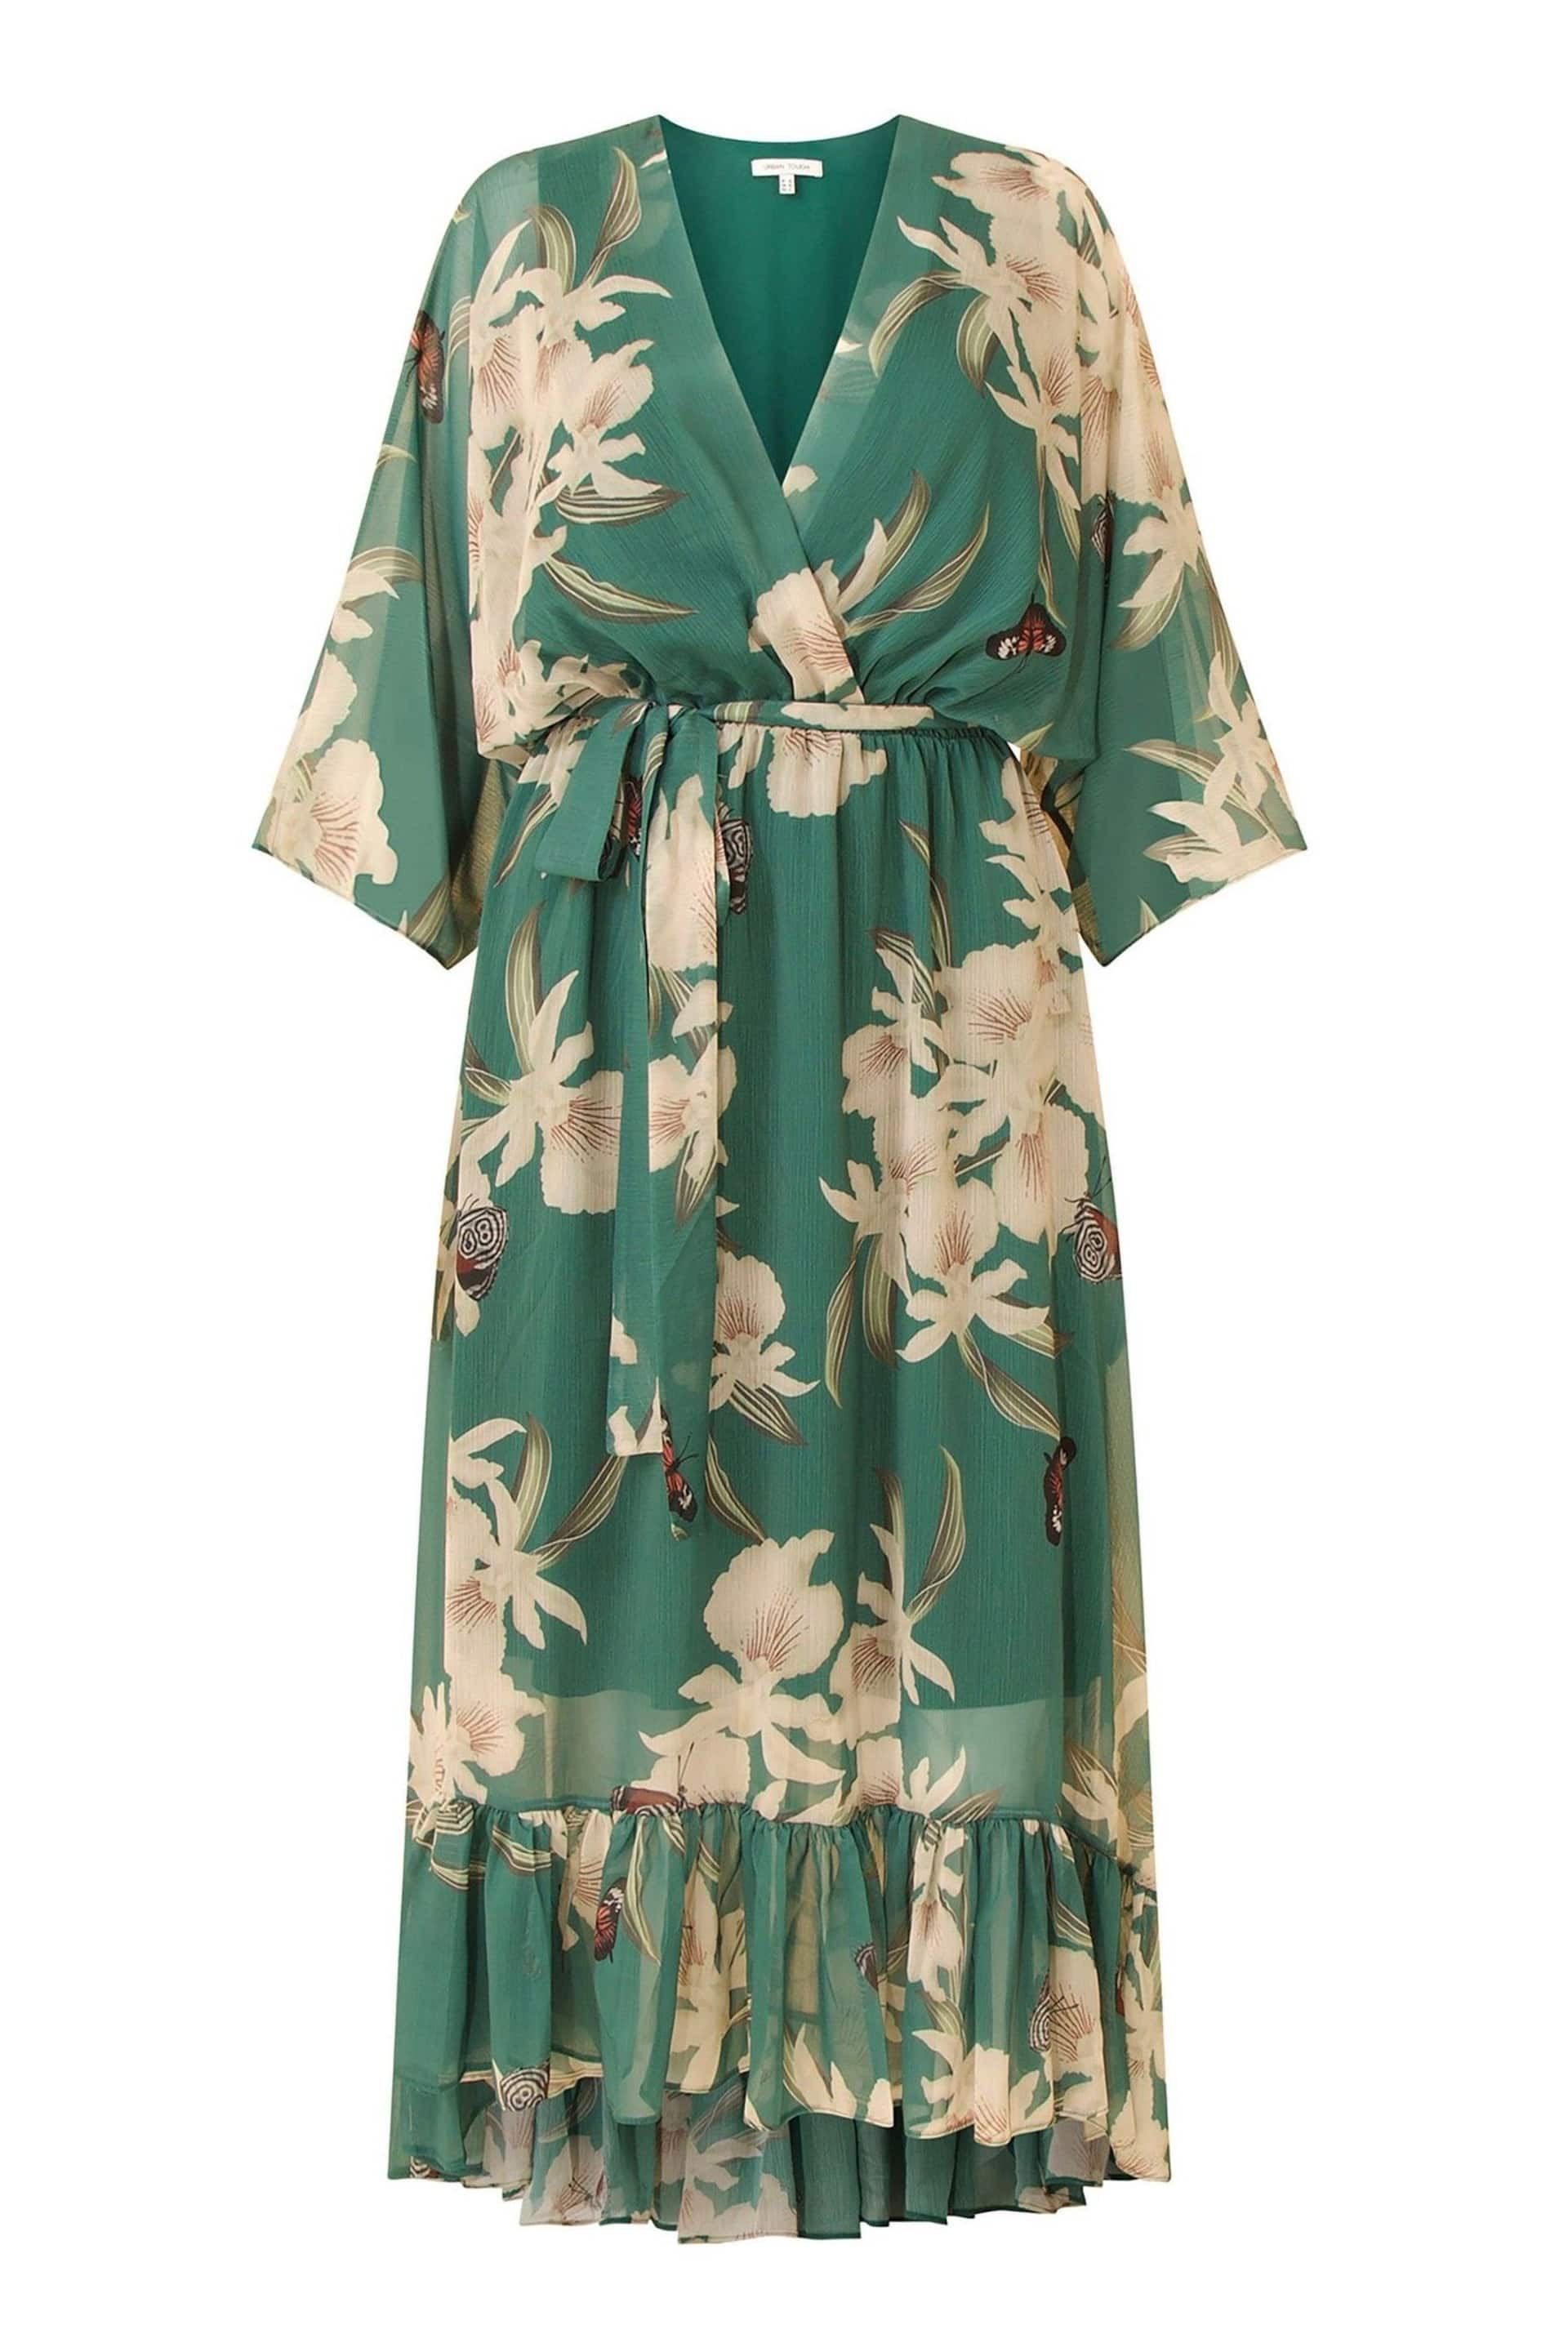 Yumi Floral Green Floral Print Kimono Midi Wrap Dress - Image 4 of 4